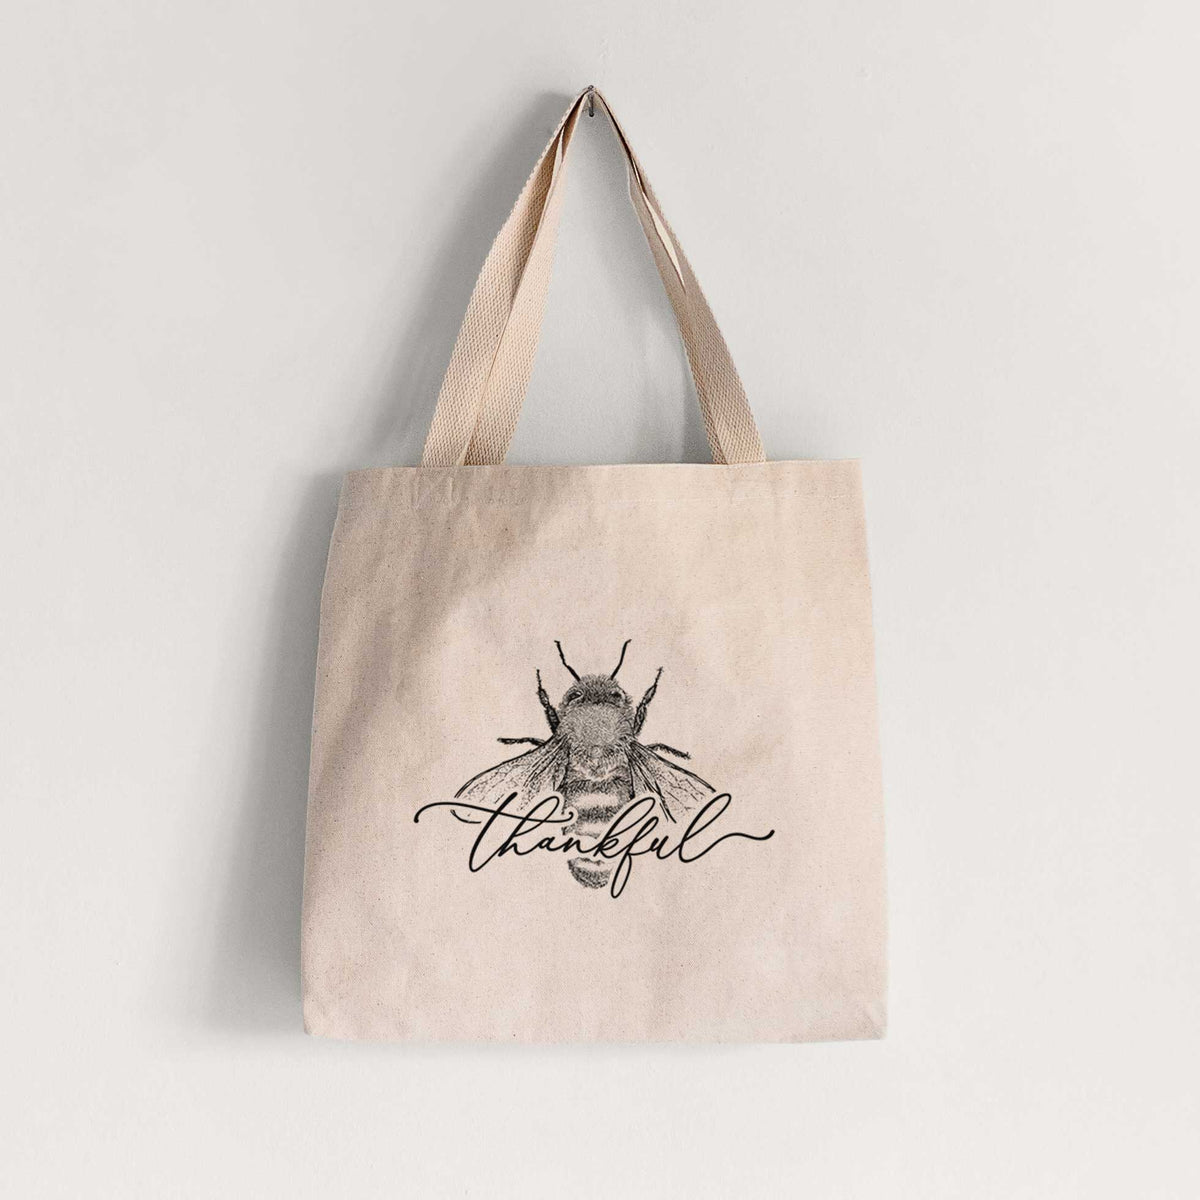 Bee Thankful - Tote Bag